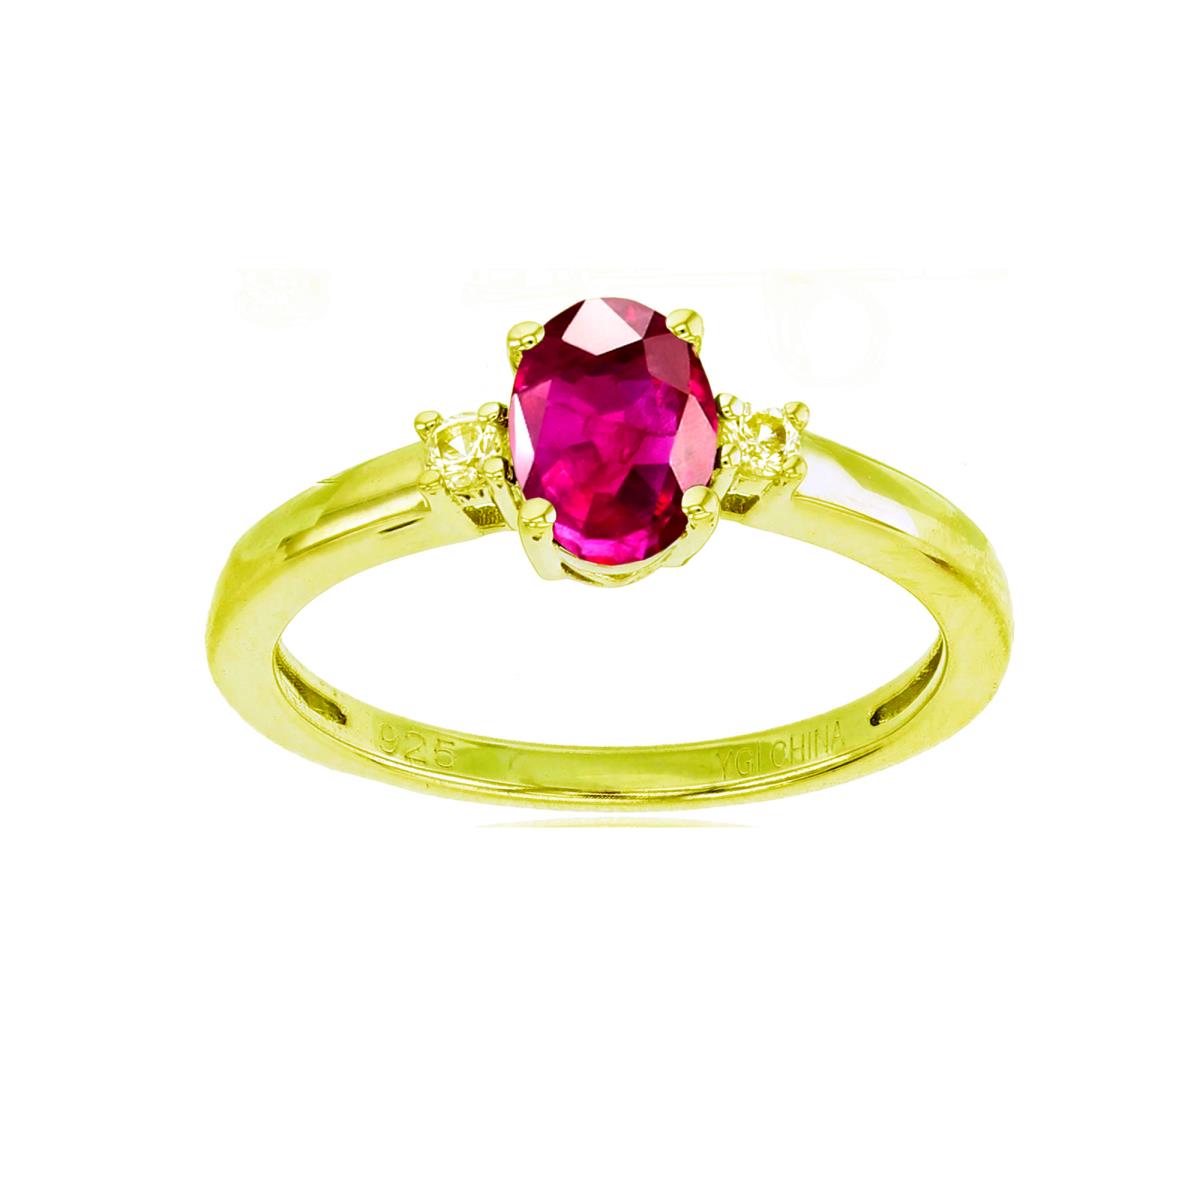 10K Yellow Gold 0.01cttw Rnd Diamonds & 7x5mm Ov Glass Filled Ruby Ring